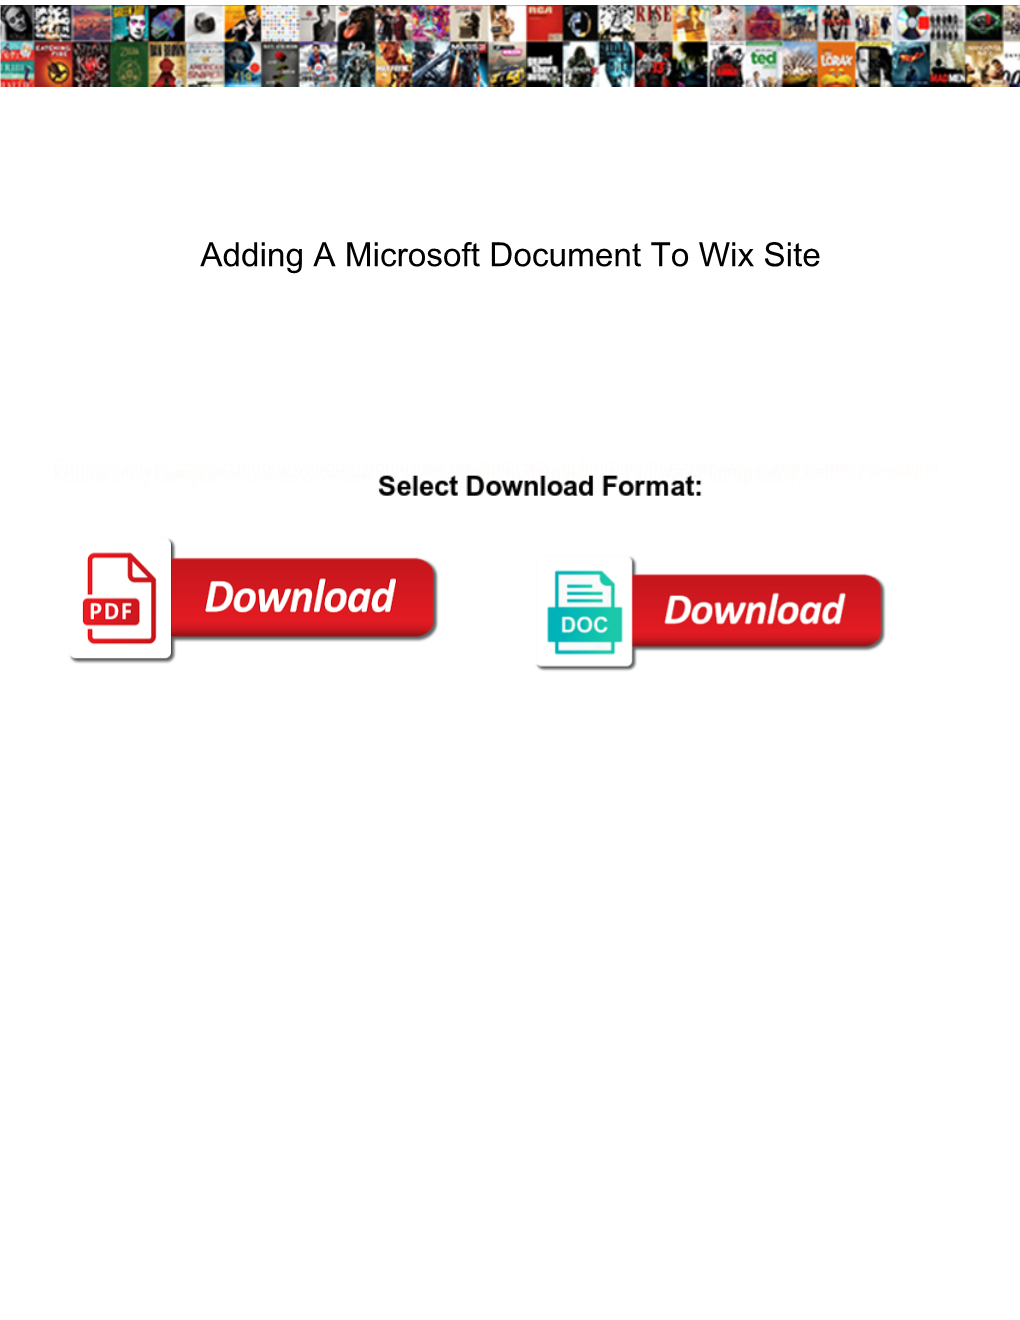 Adding a Microsoft Document to Wix Site